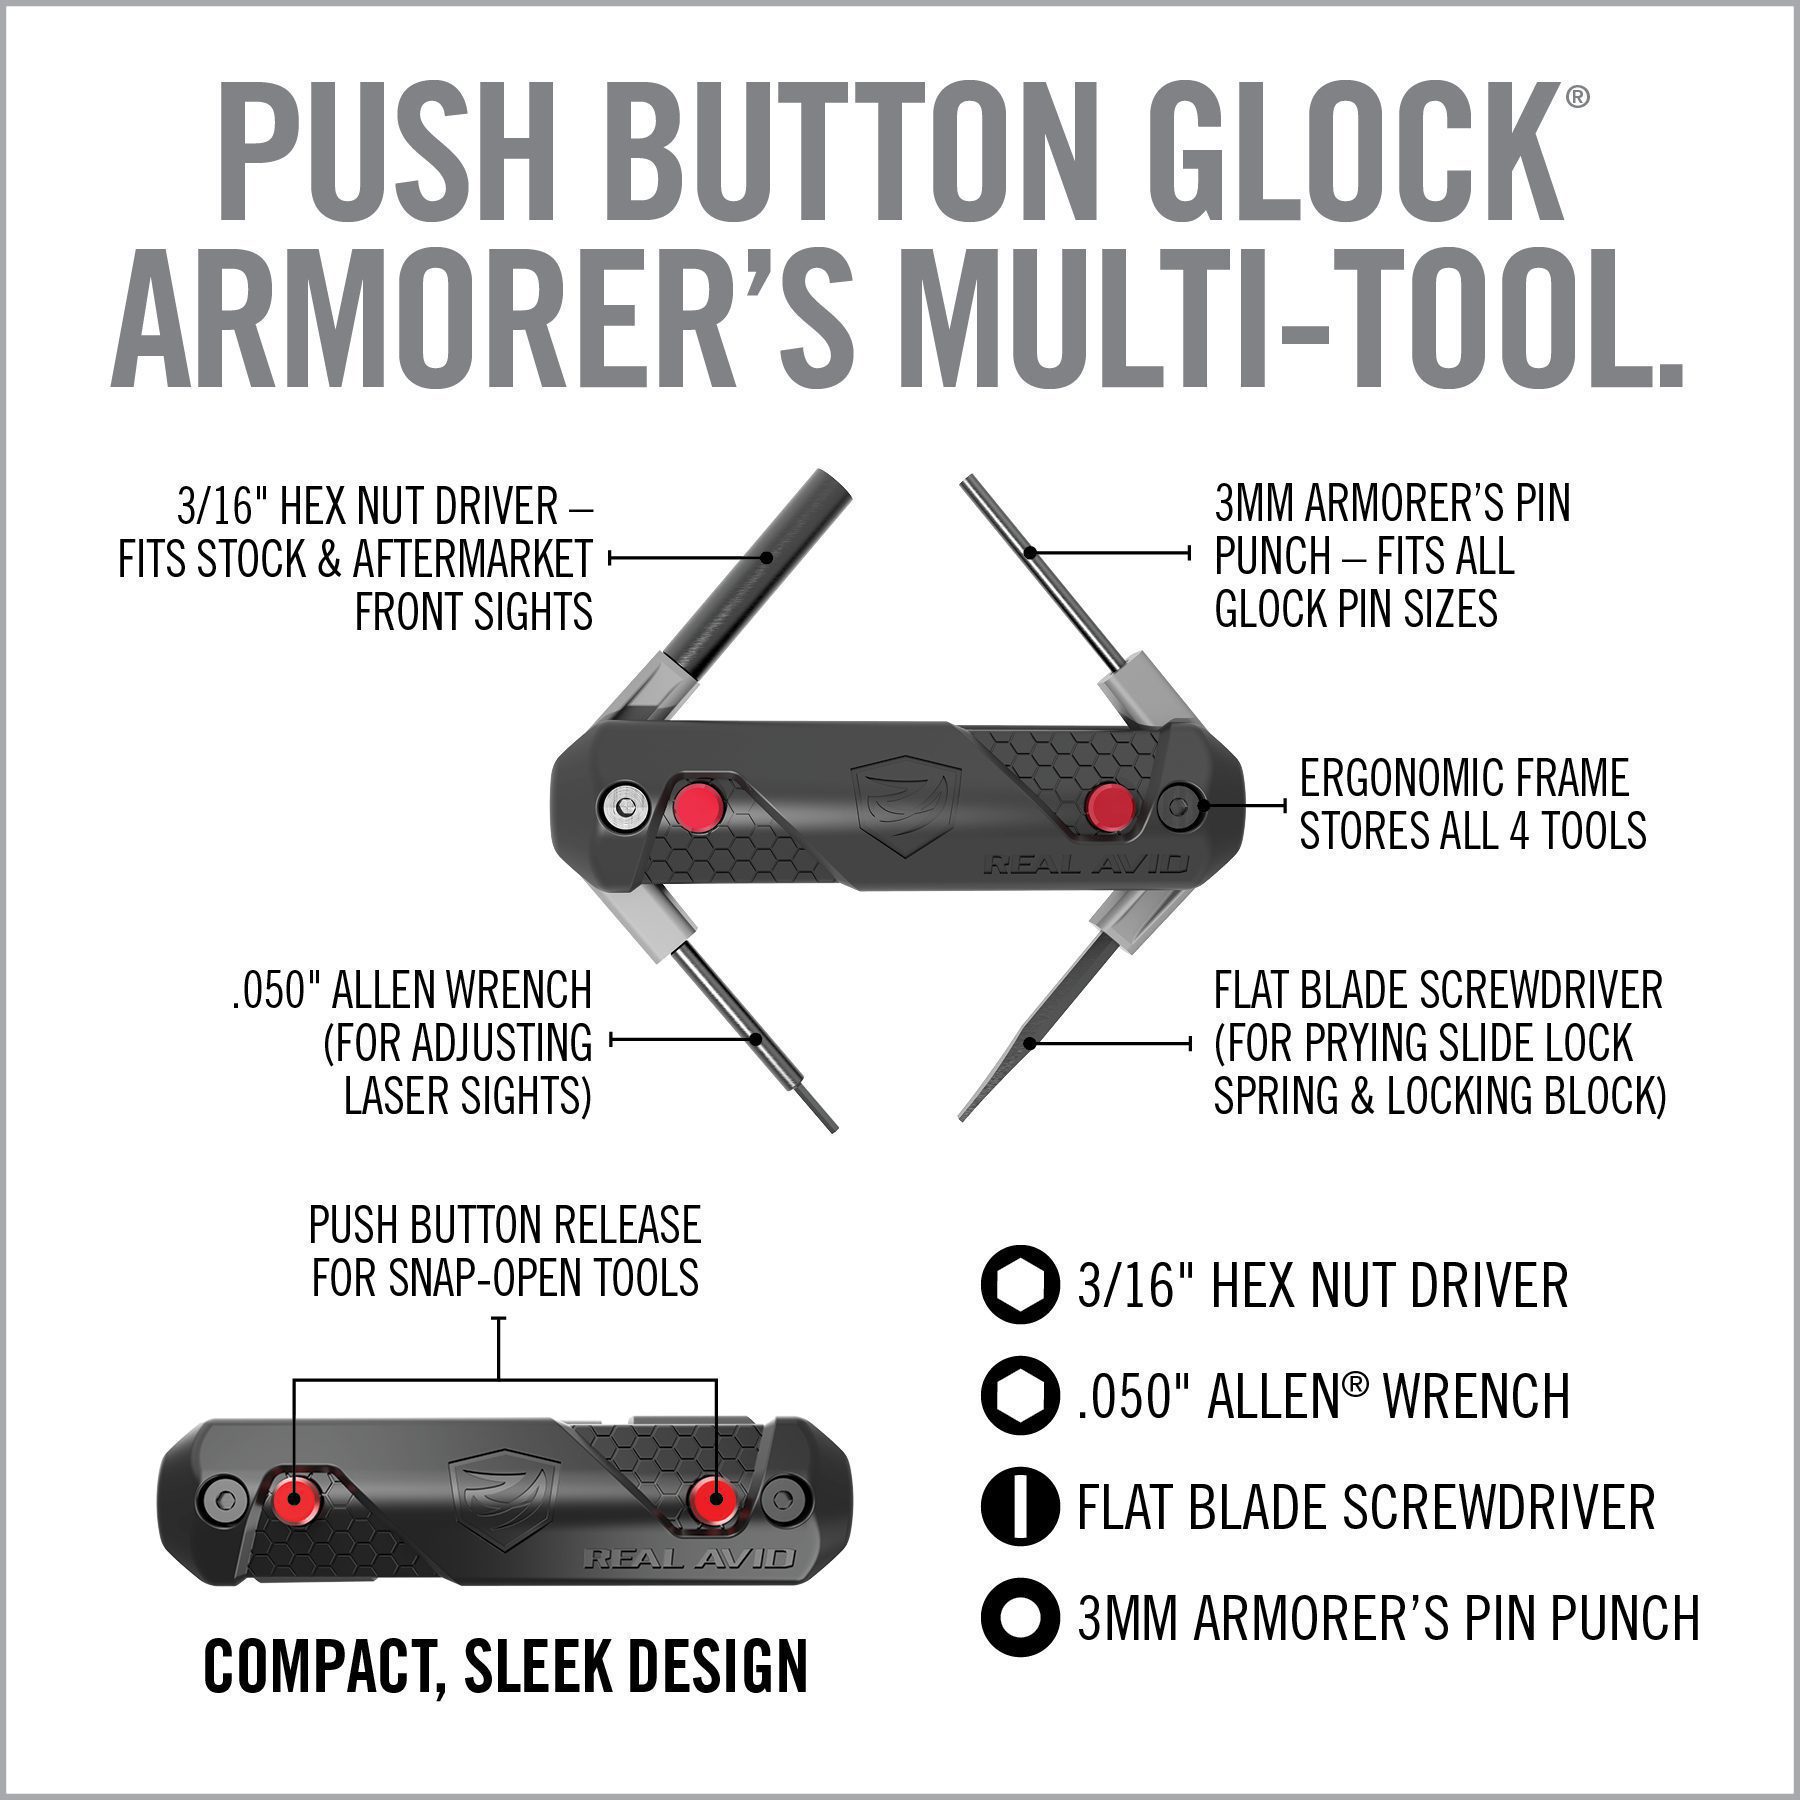 the push button clock armorer's multi - tool